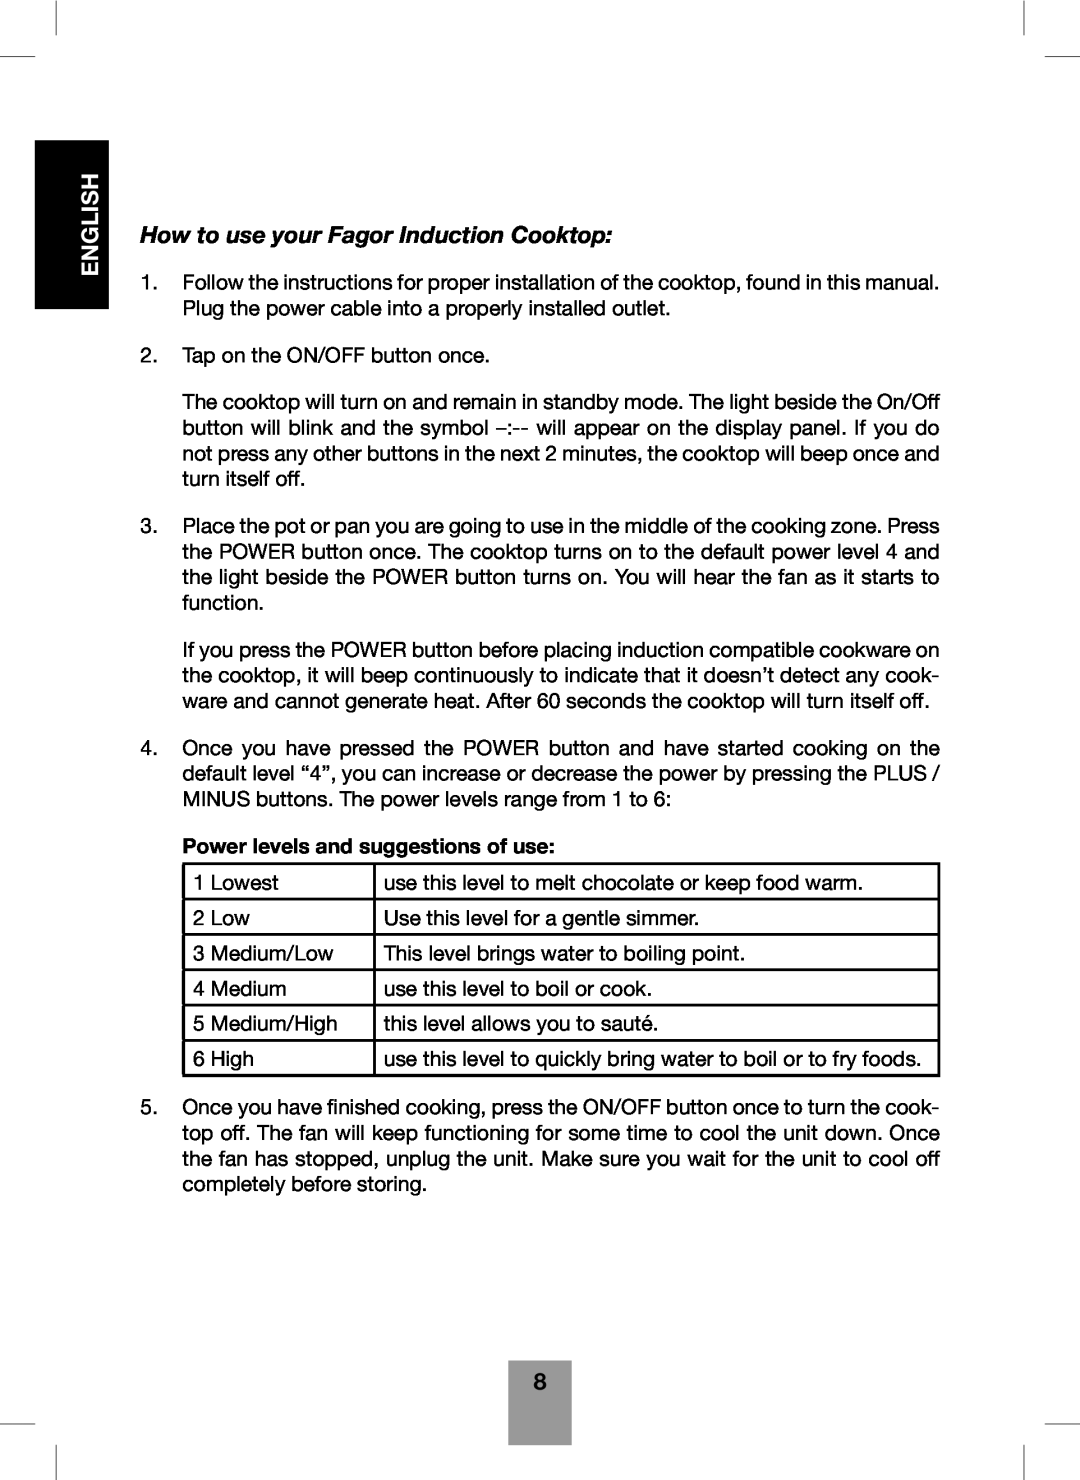 Fagor America Portable Induction Cooktop user manual How to use your Fagor Induction Cooktop, English 